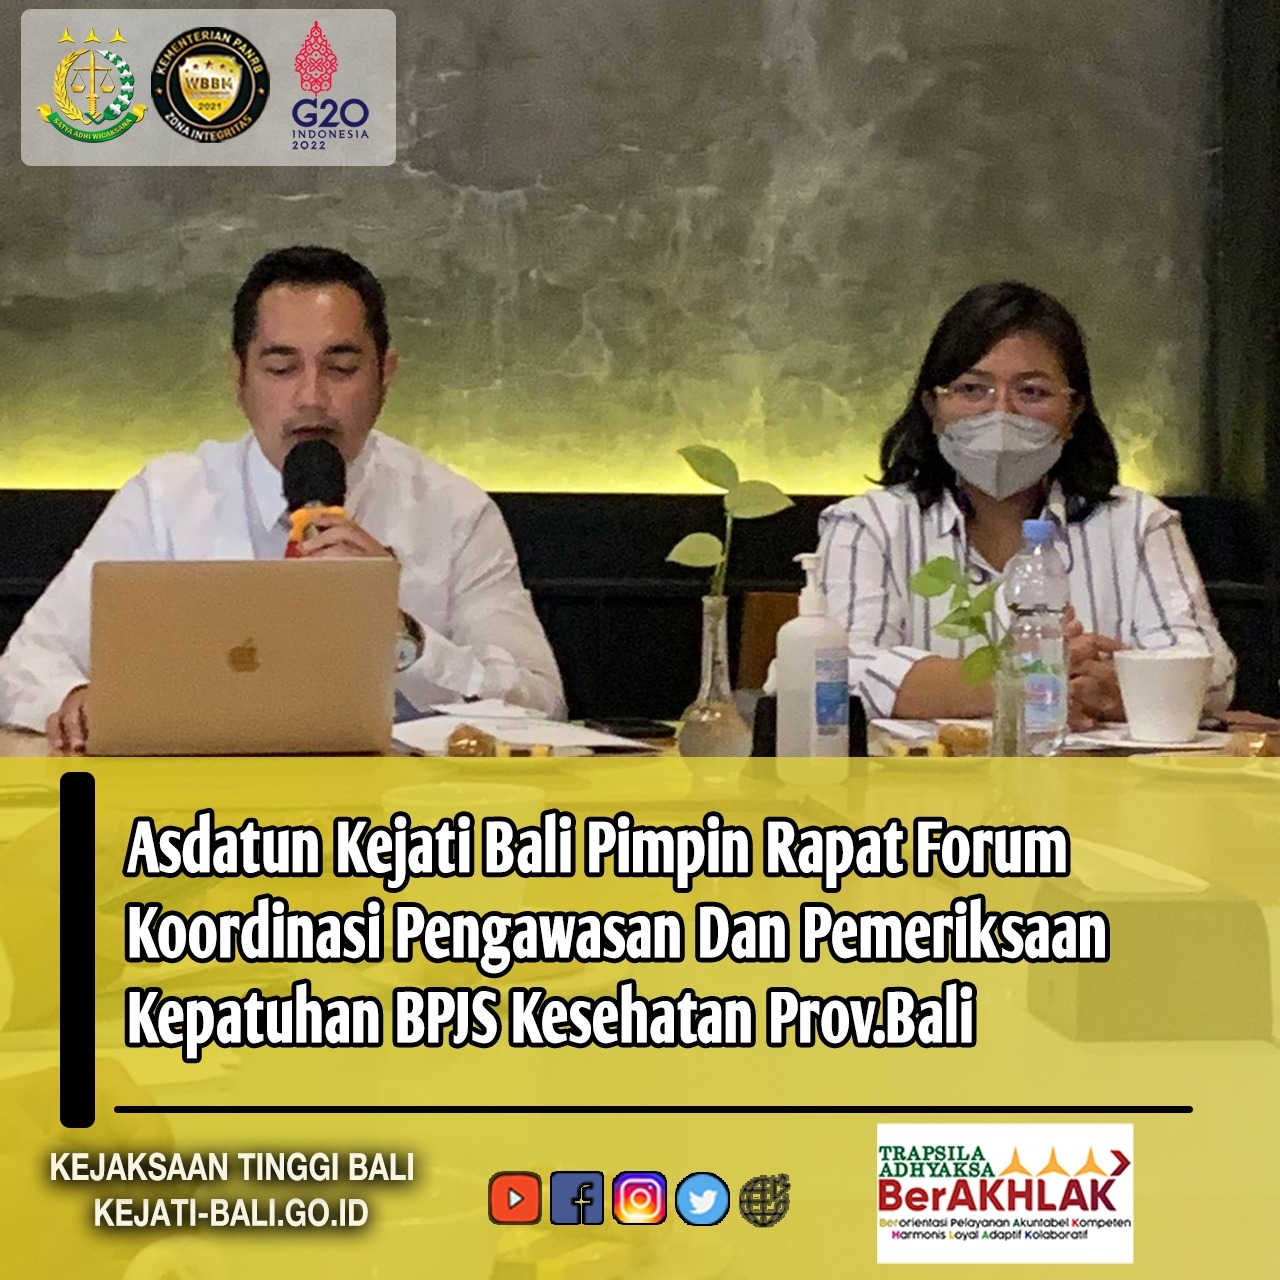 Asdatun Kejati Bali Pimpin Rapat Forum Koordinasi Pengawasan Dan Pemeriksaan Kepatuhan BPJS Kesehatan Prov.Bali